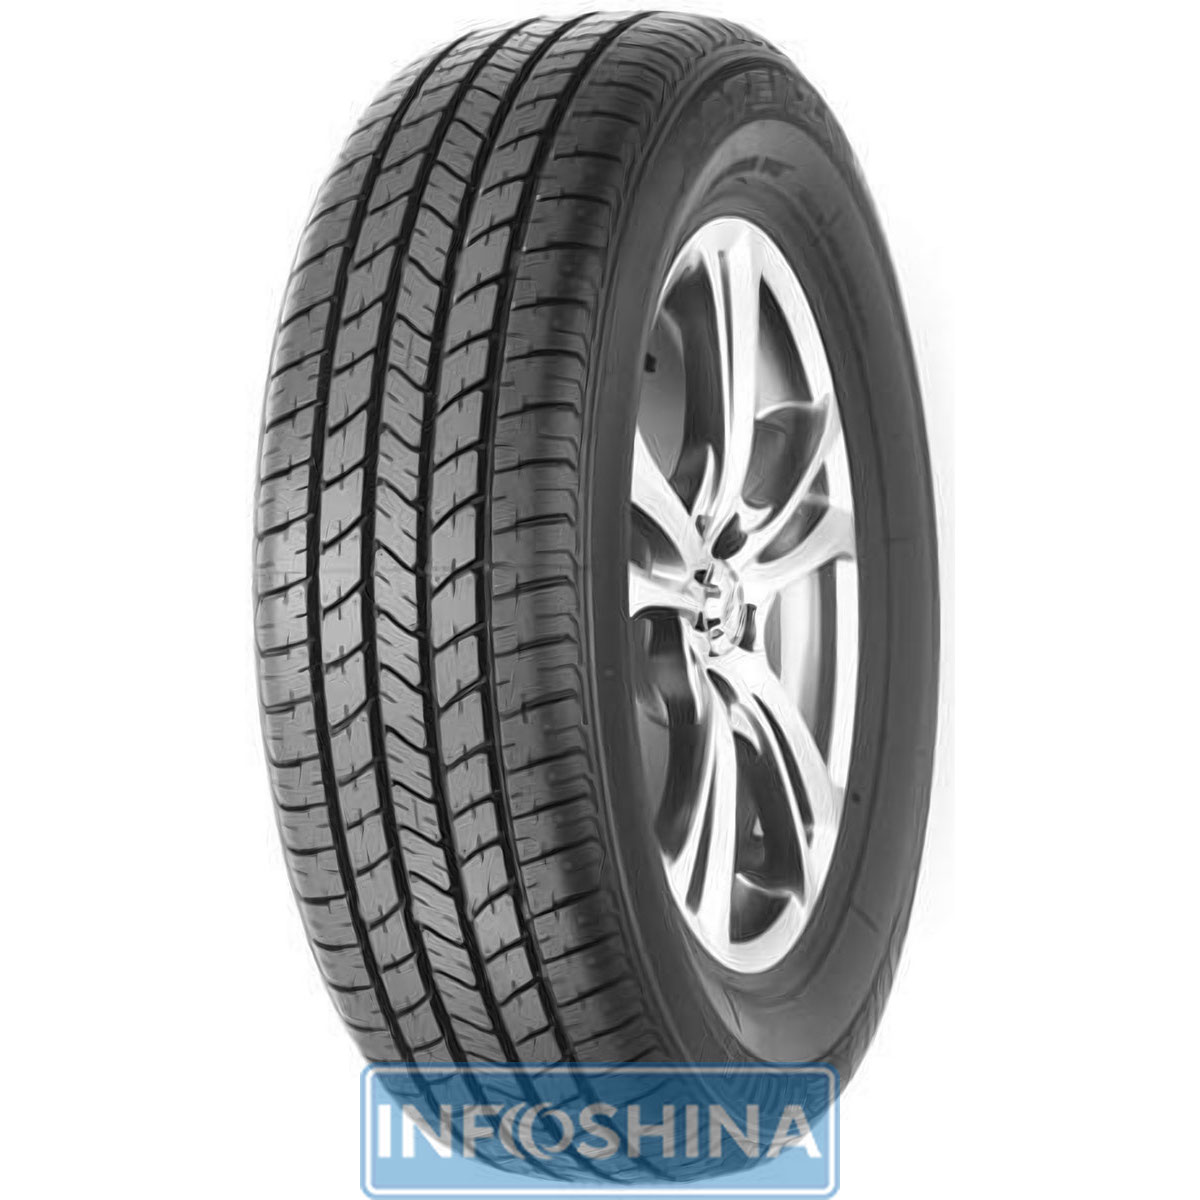 Купить шины Bridgestone Potenza RE080 195/60 R15 88H